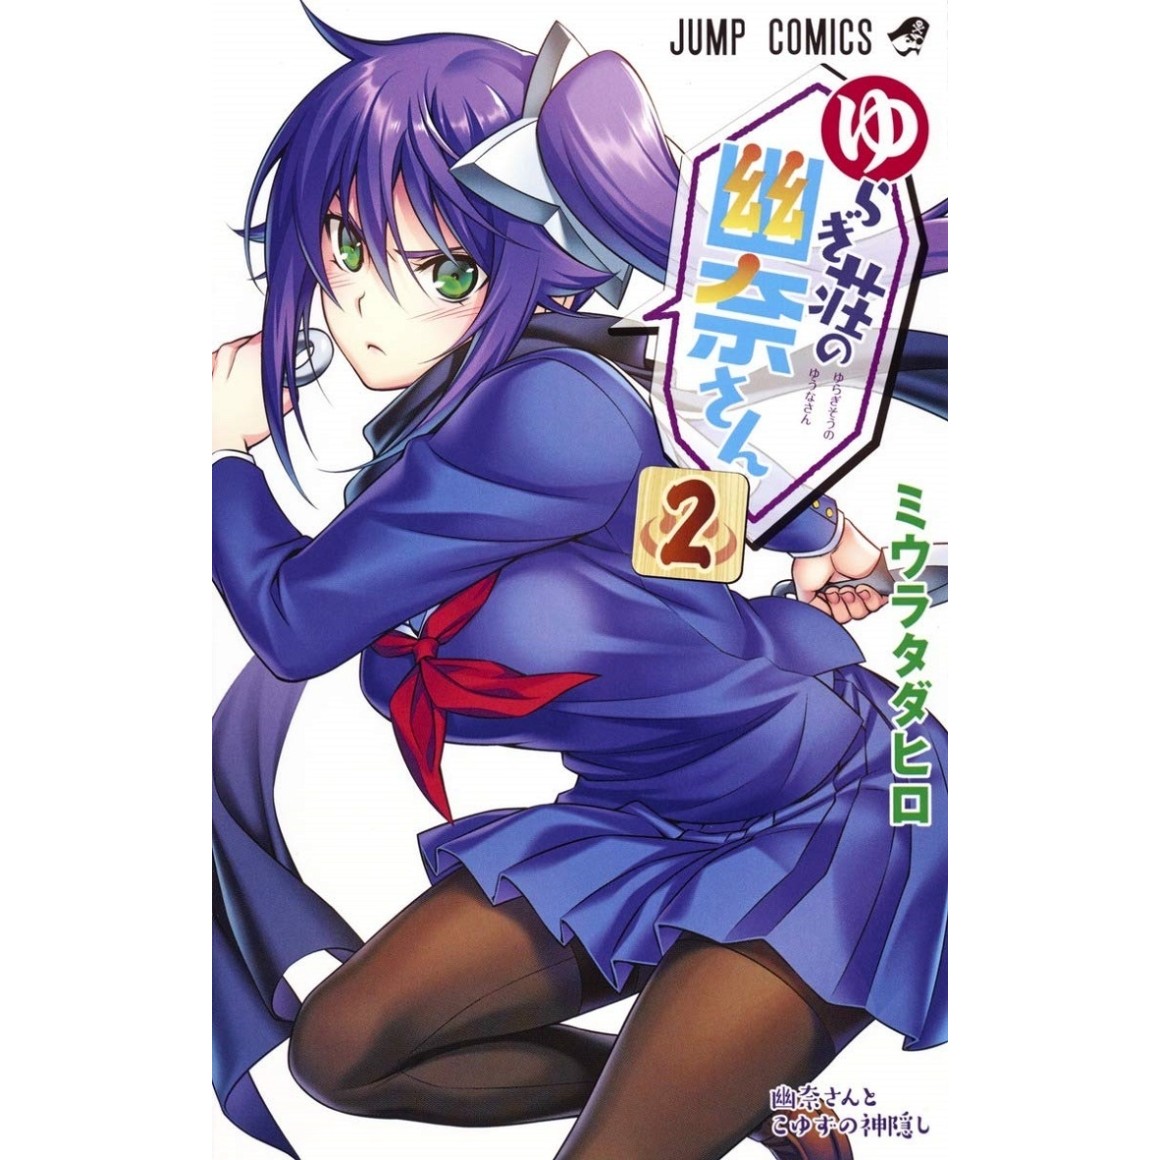 Yuragisou no YUUNA san vol. 7 - Edição japonesa